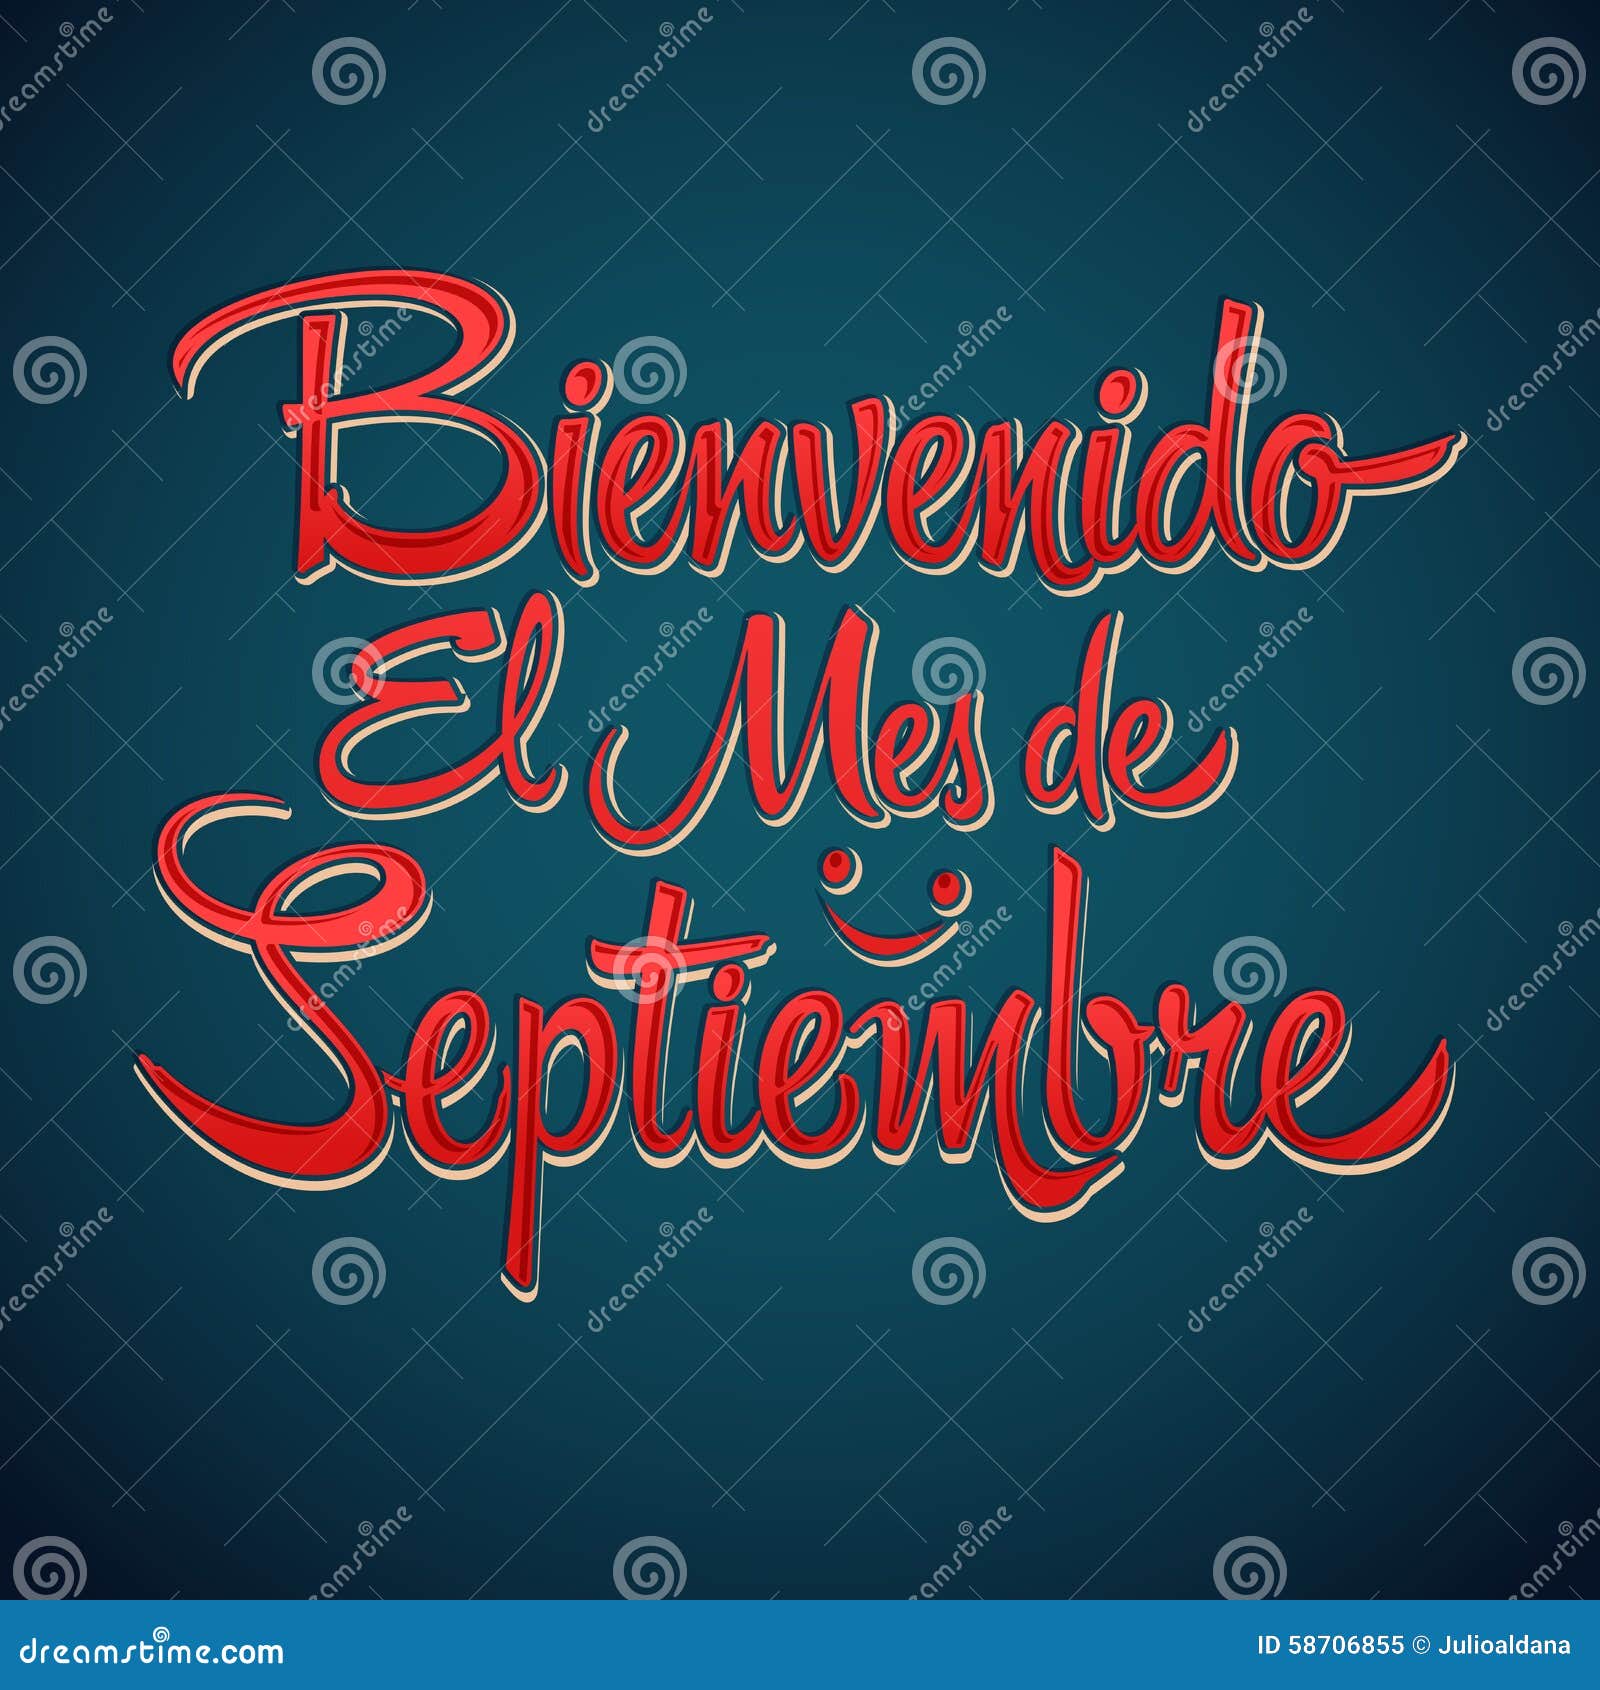 Bienvenido , Welcome in Spanish Stock Vector by ©dizanna 157969704